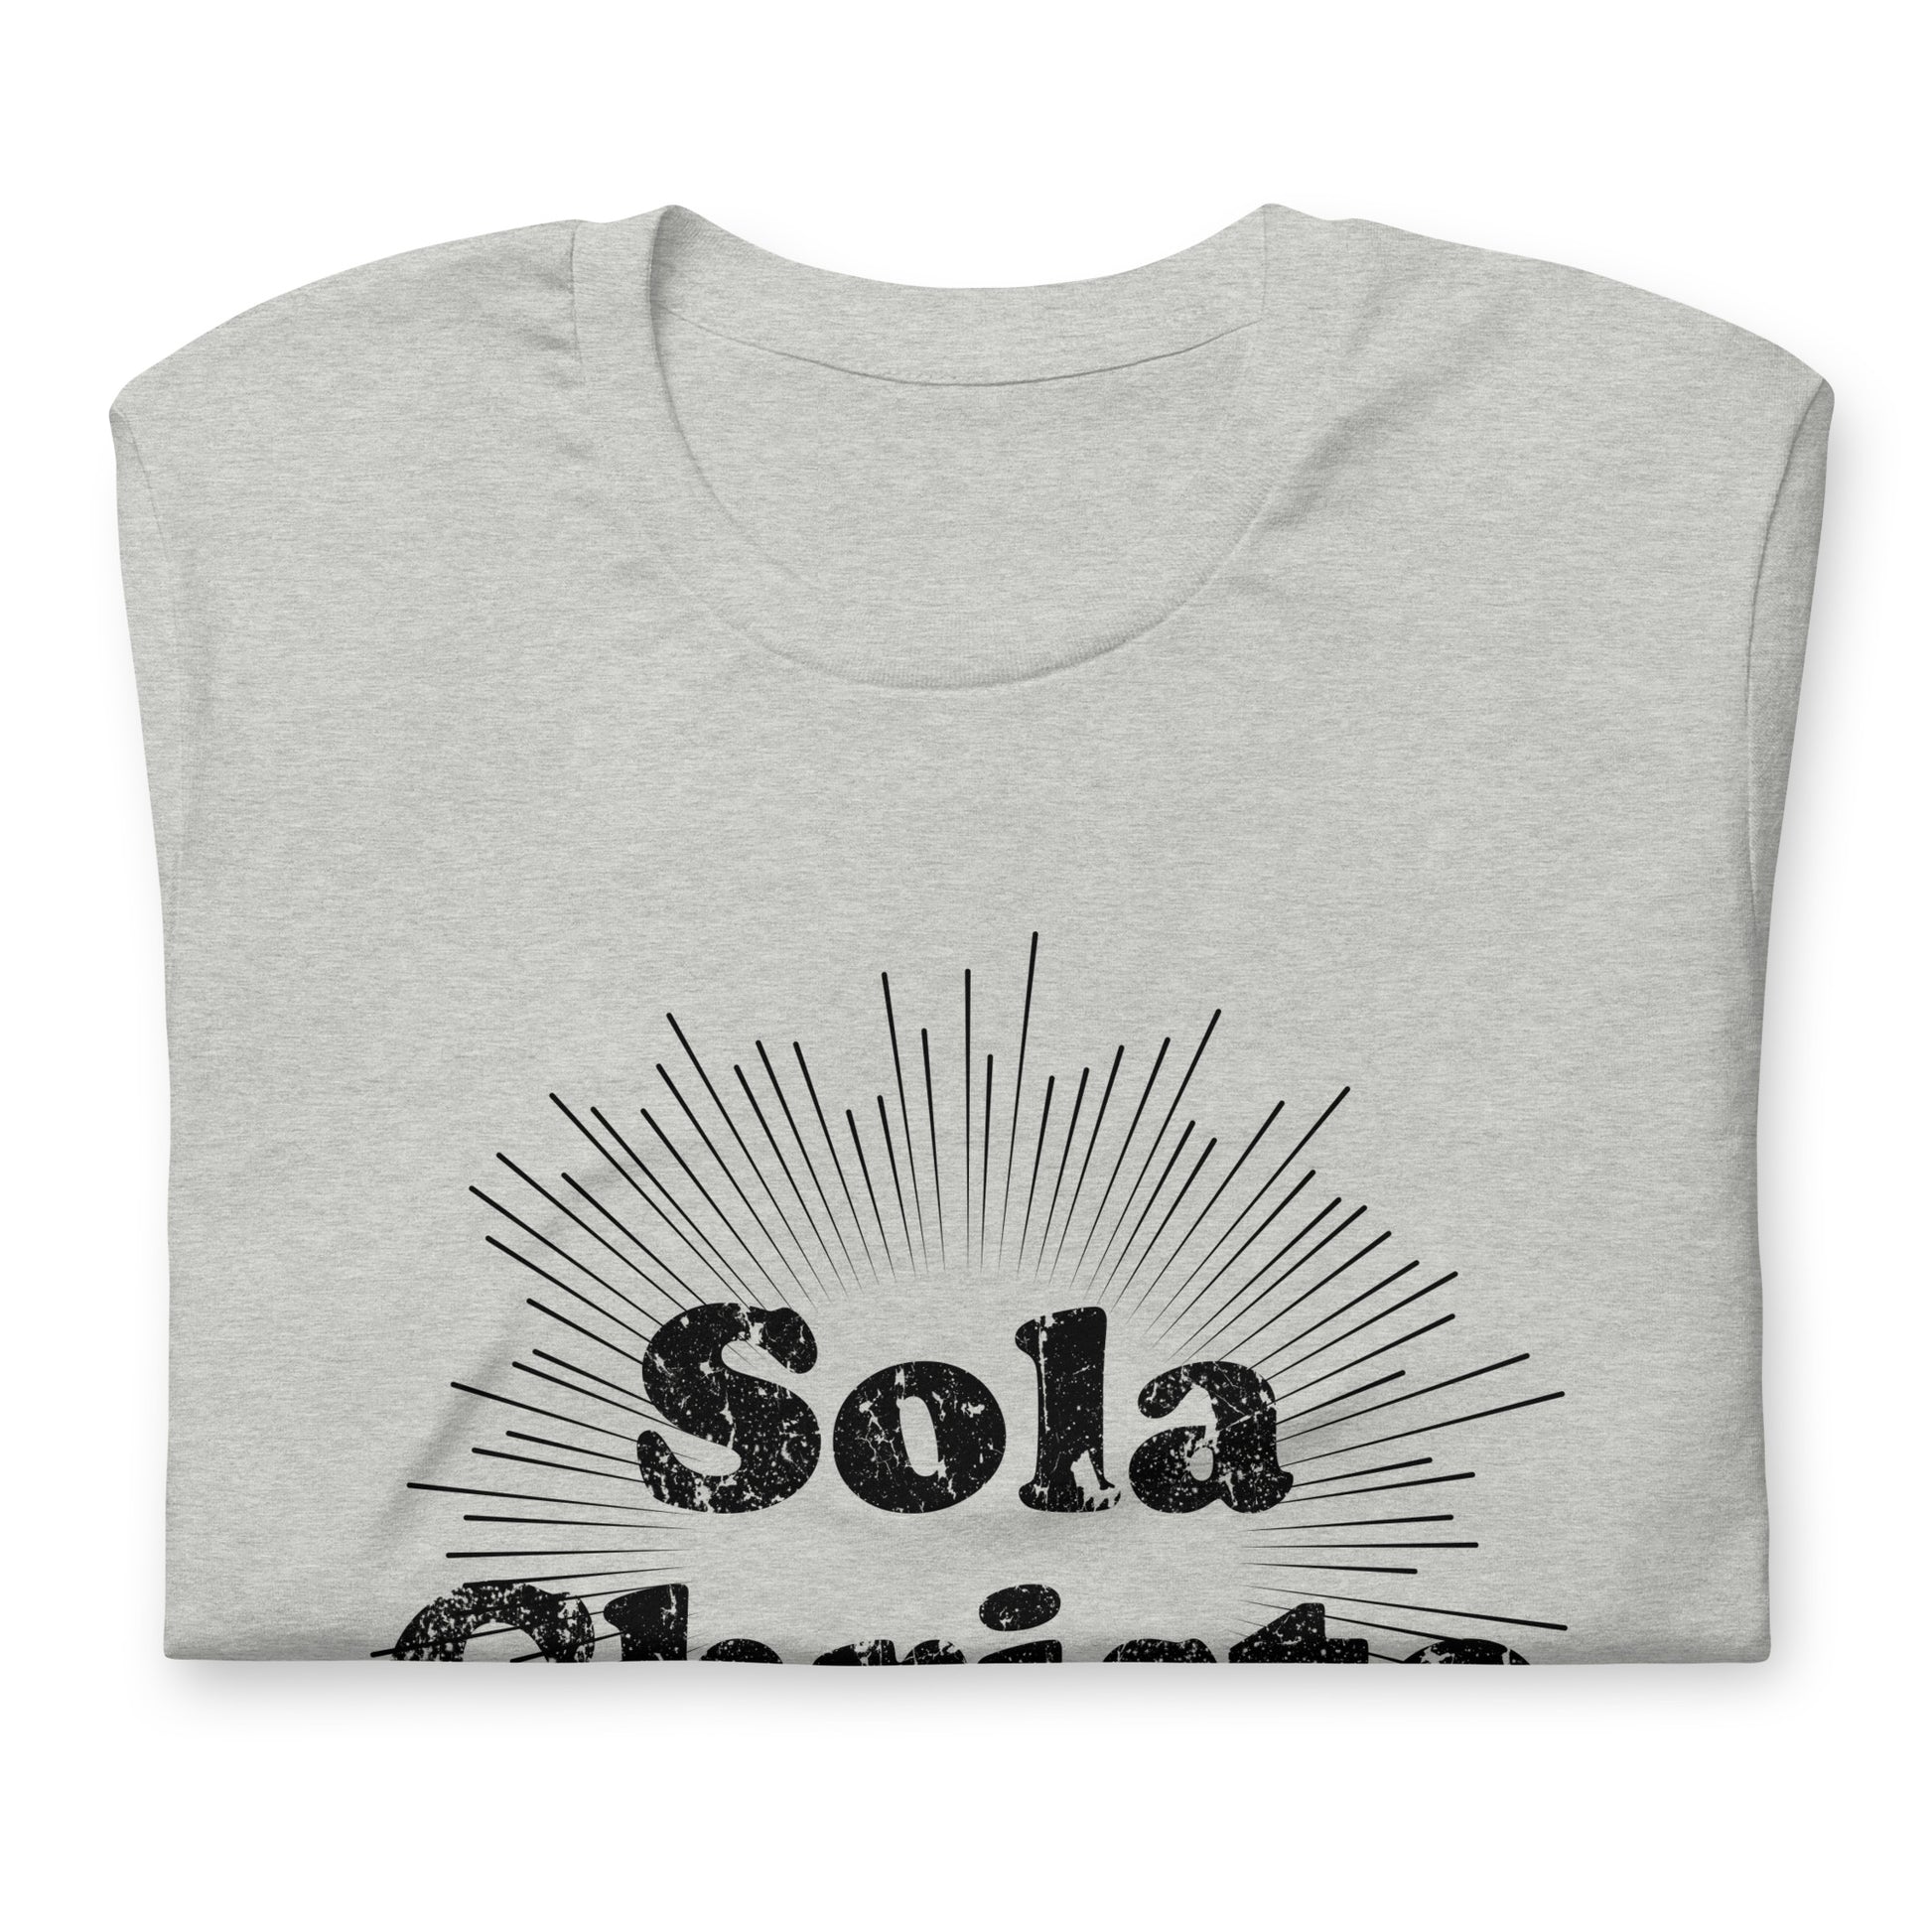 Sola Christo! Faded Sunburst Unisex t-shirt - Solid Rock Designs | Christian Apparel